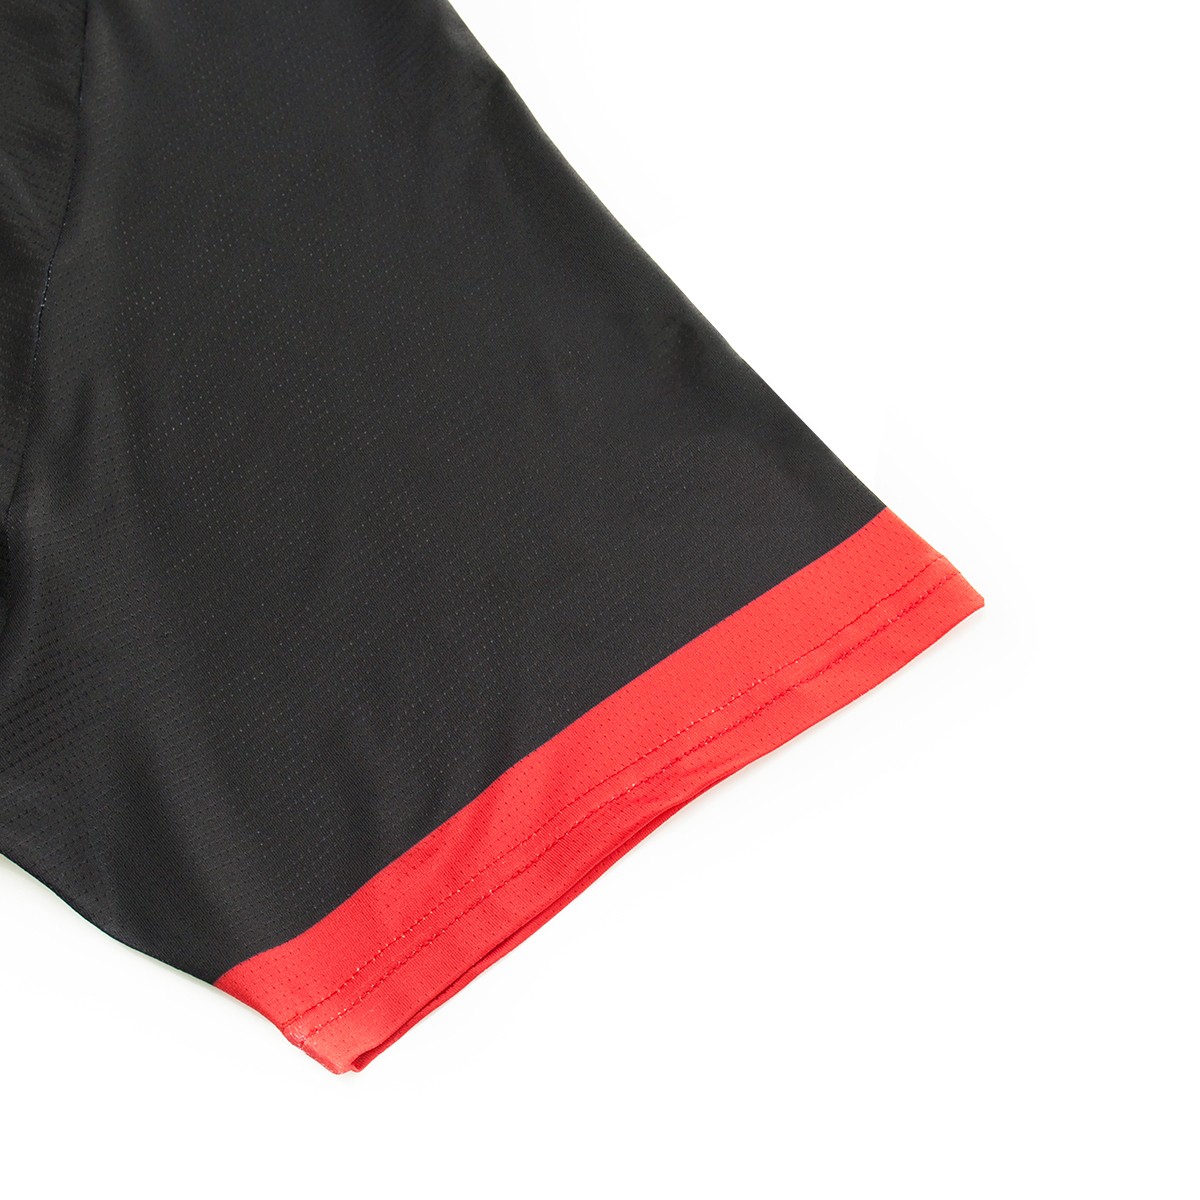 Karool top running t shirt supplier for sporting-4